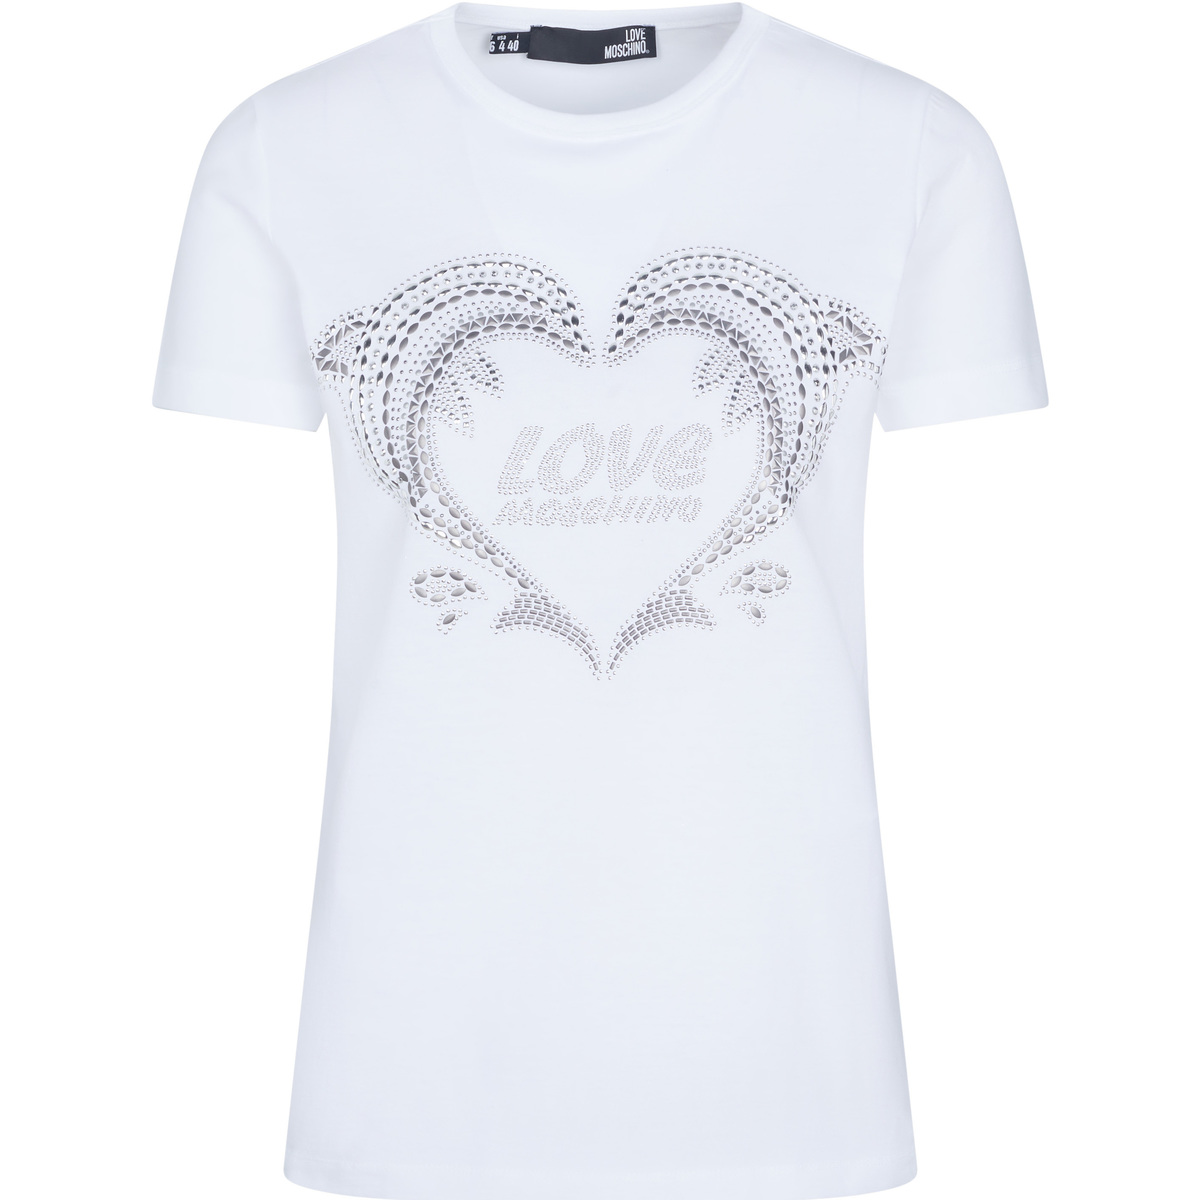 Vêtements Femme Ottolinger faded logo T-shirt Haut Blanc